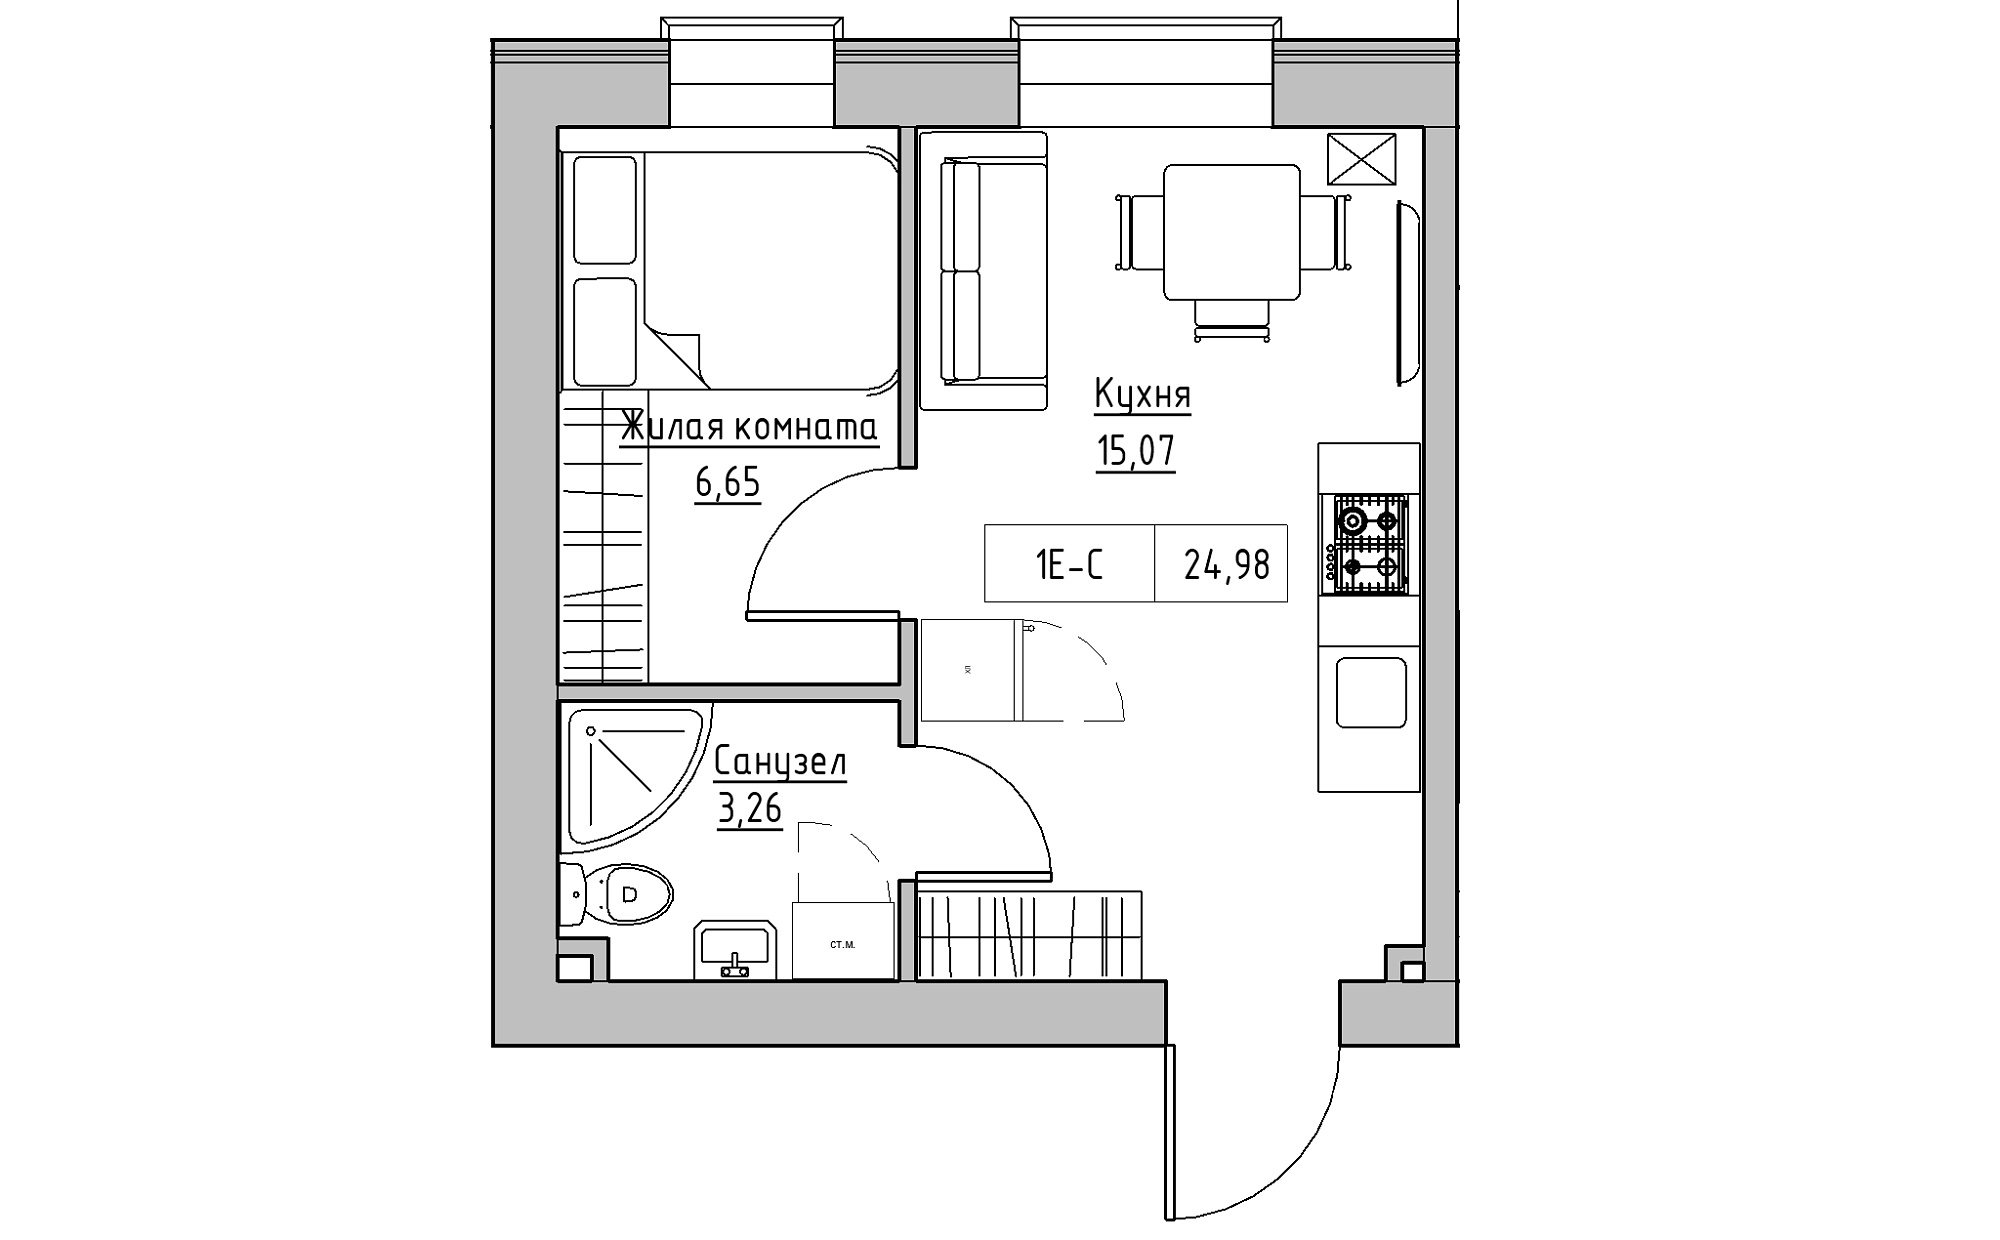 Planning 1-rm flats area 24.98m2, KS-022-03/0004.